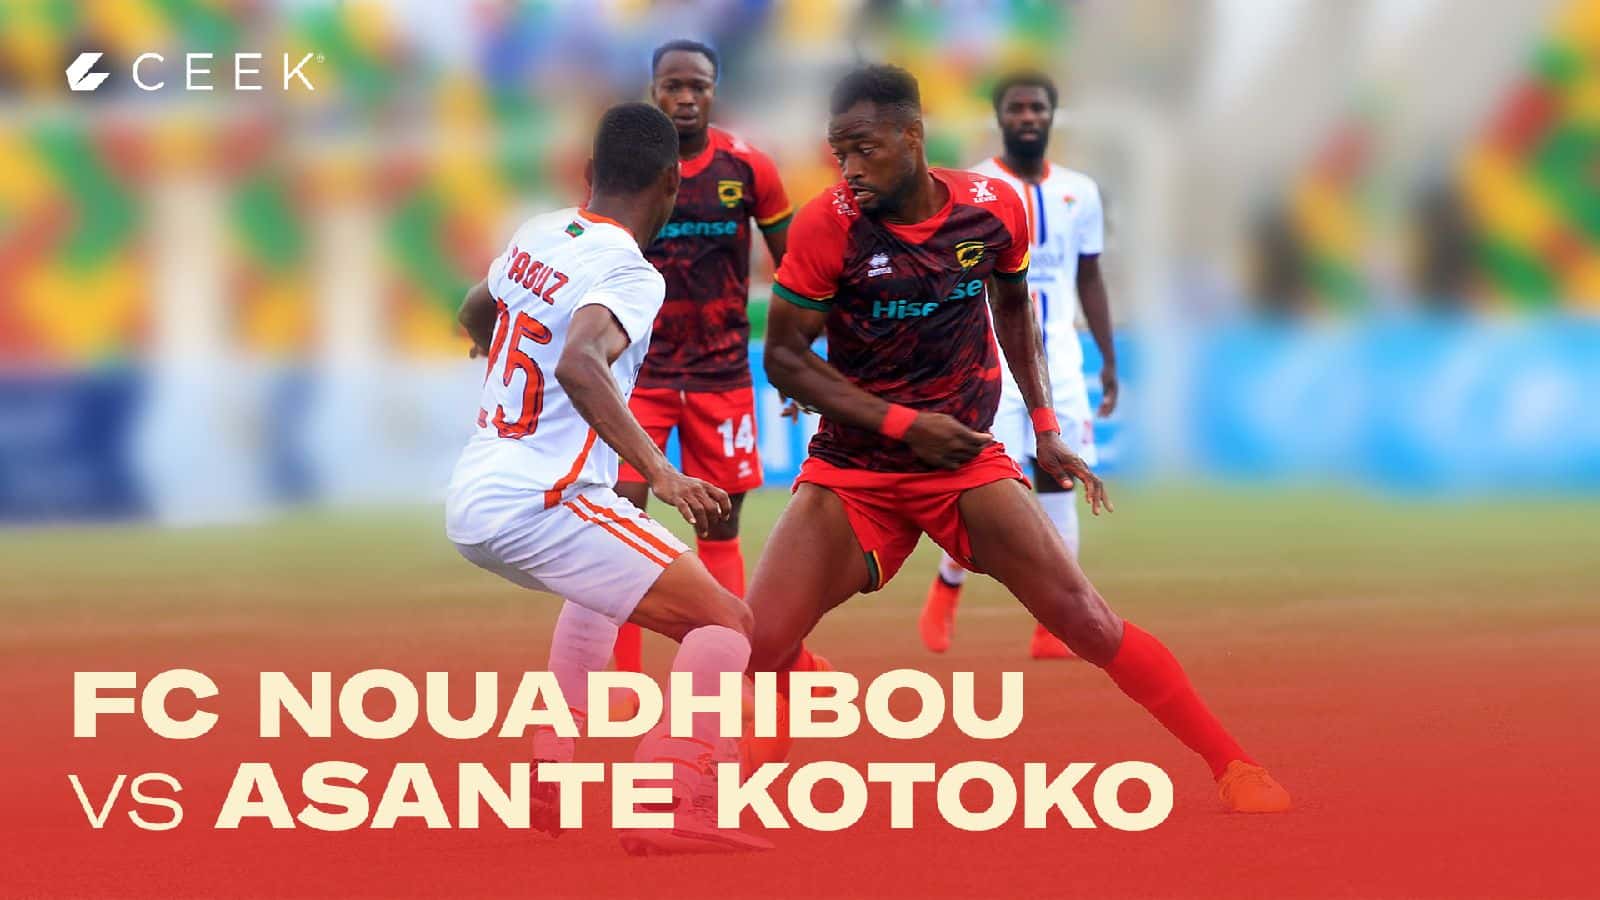 FC Nouadhibou v Asante Kotoko 29 November 2020